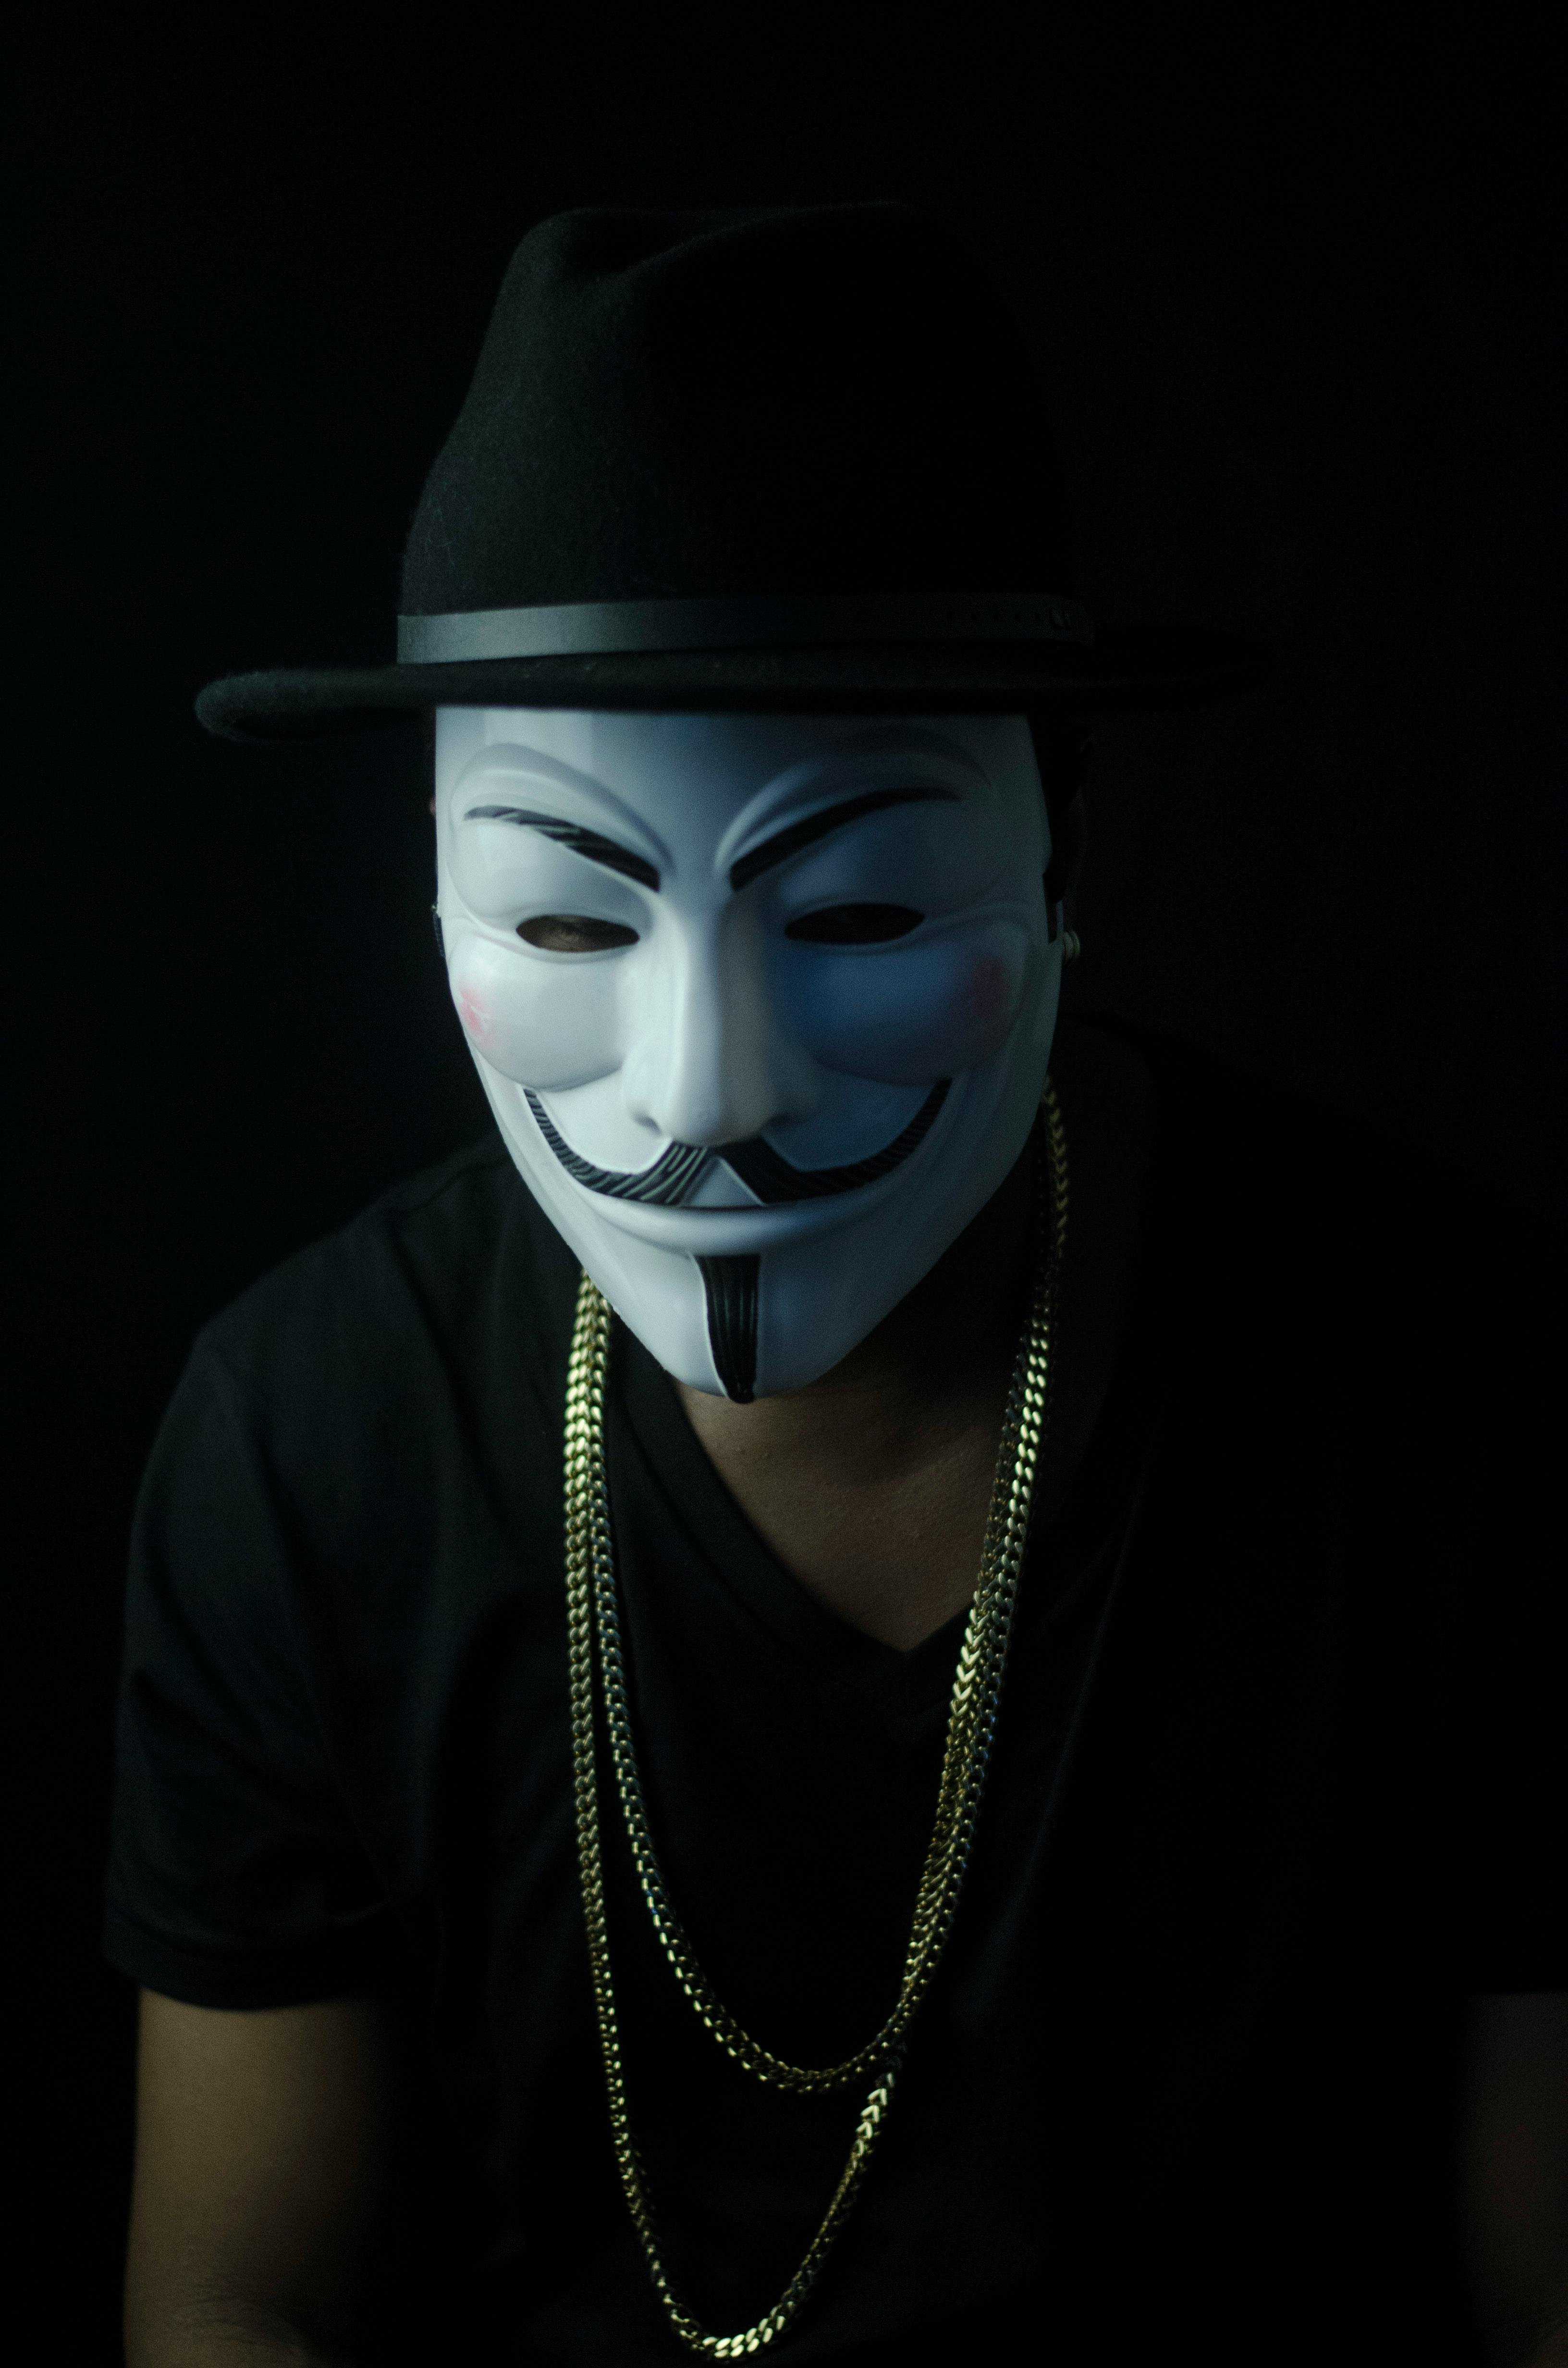 anonymous hd